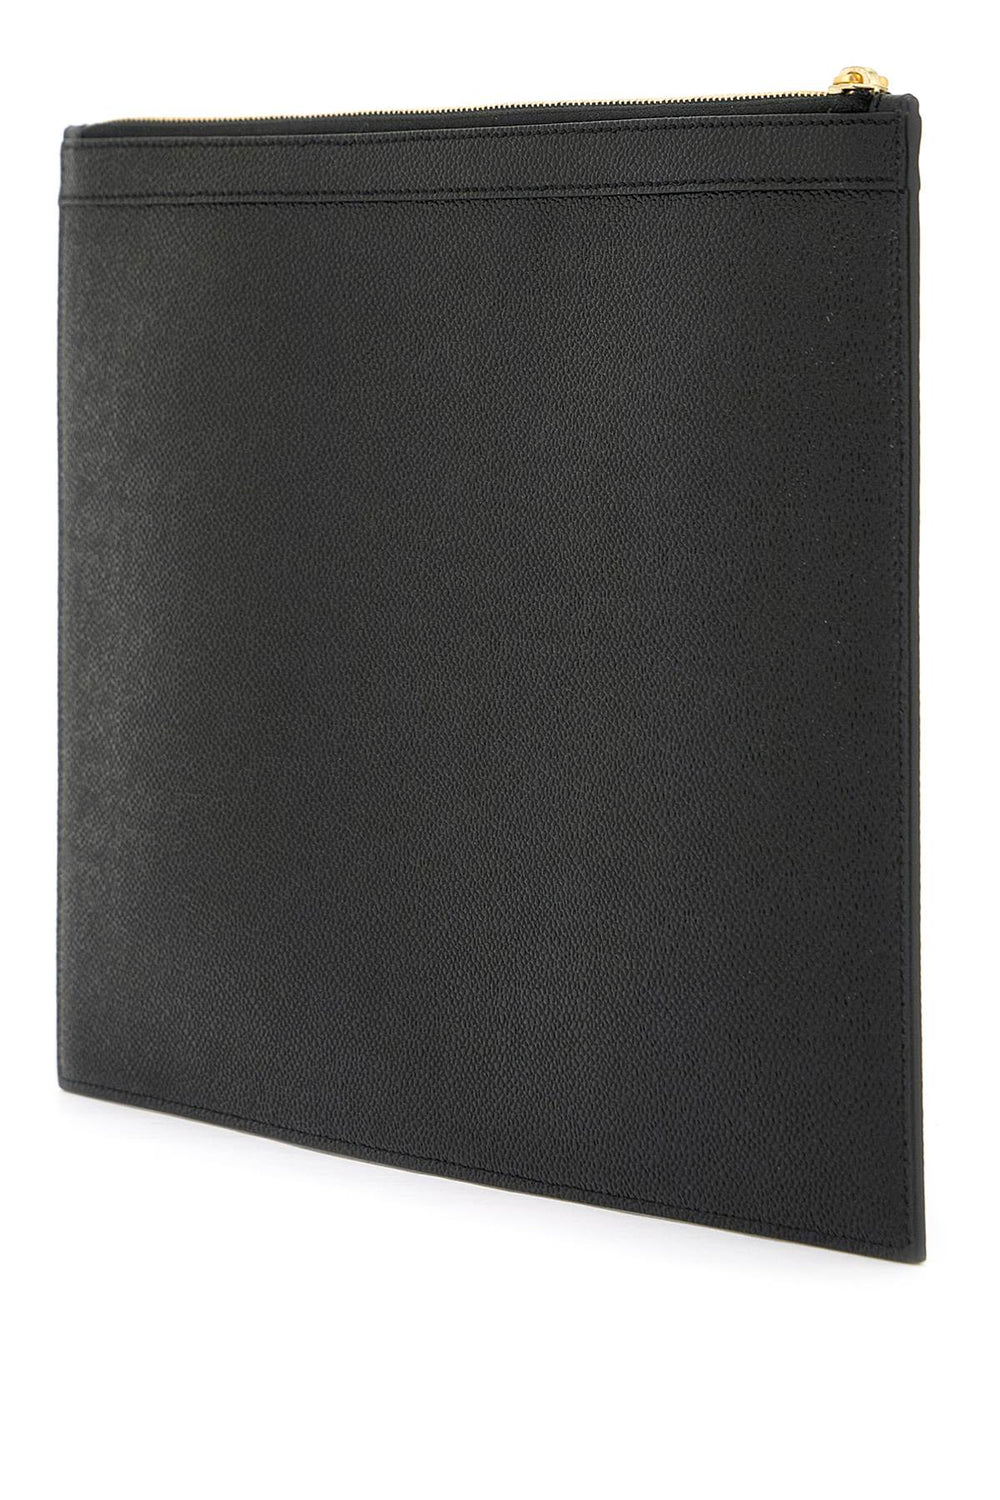 leather medium document holder-1